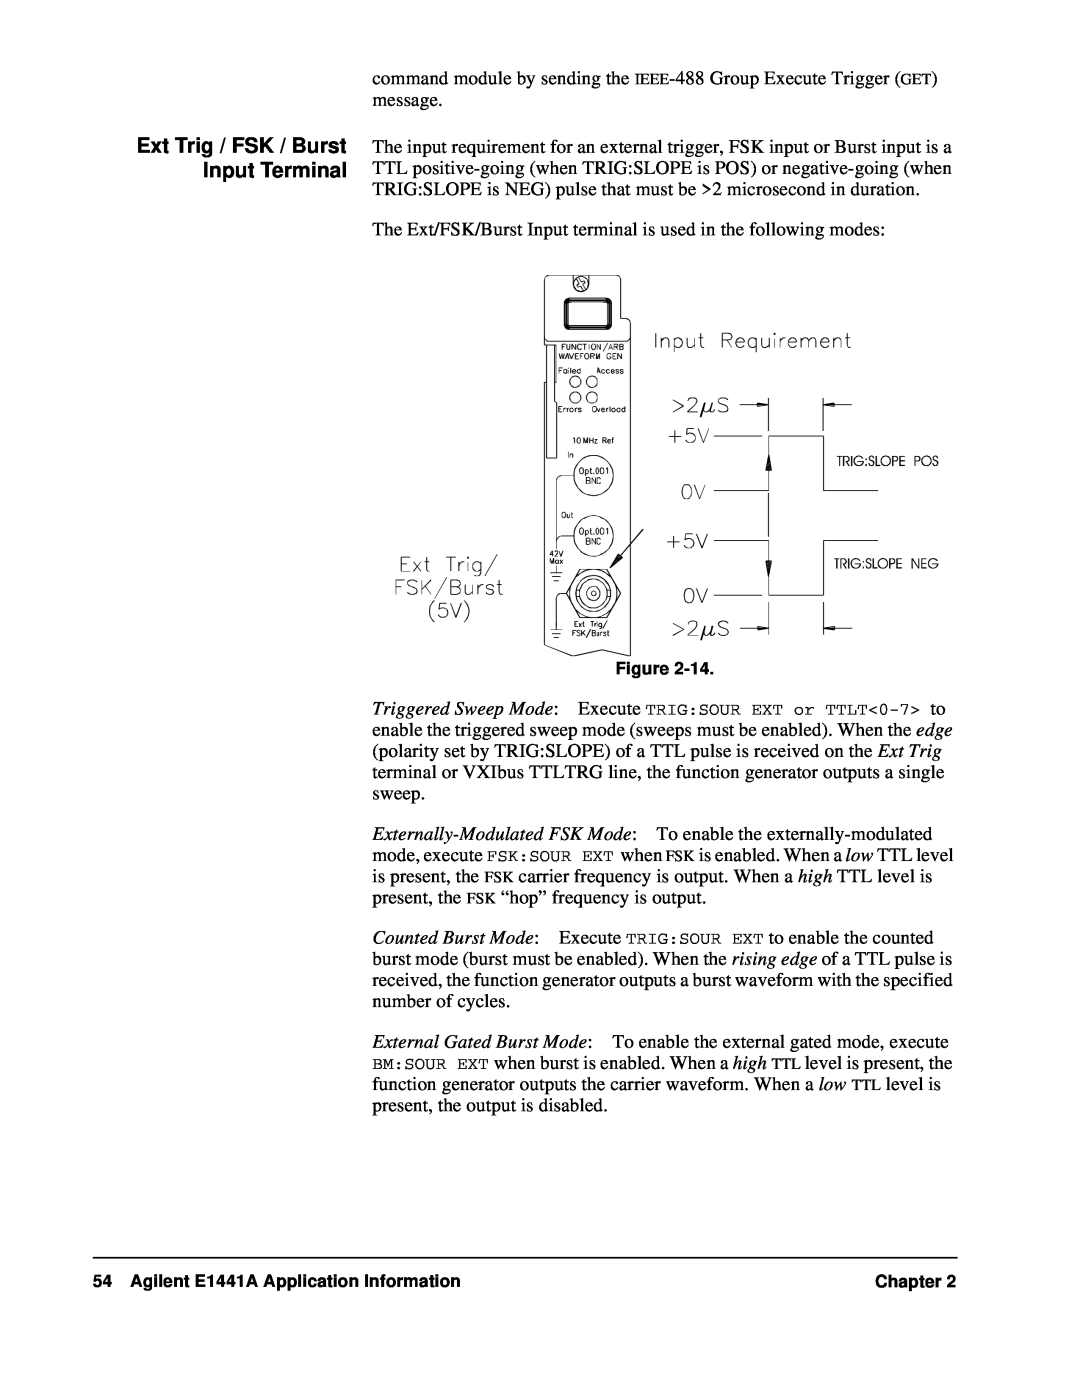 Agilent Technologies Ext Trig / FSK / Burst Input Terminal, Figure, Agilent E1441A Application Information, Chapter 